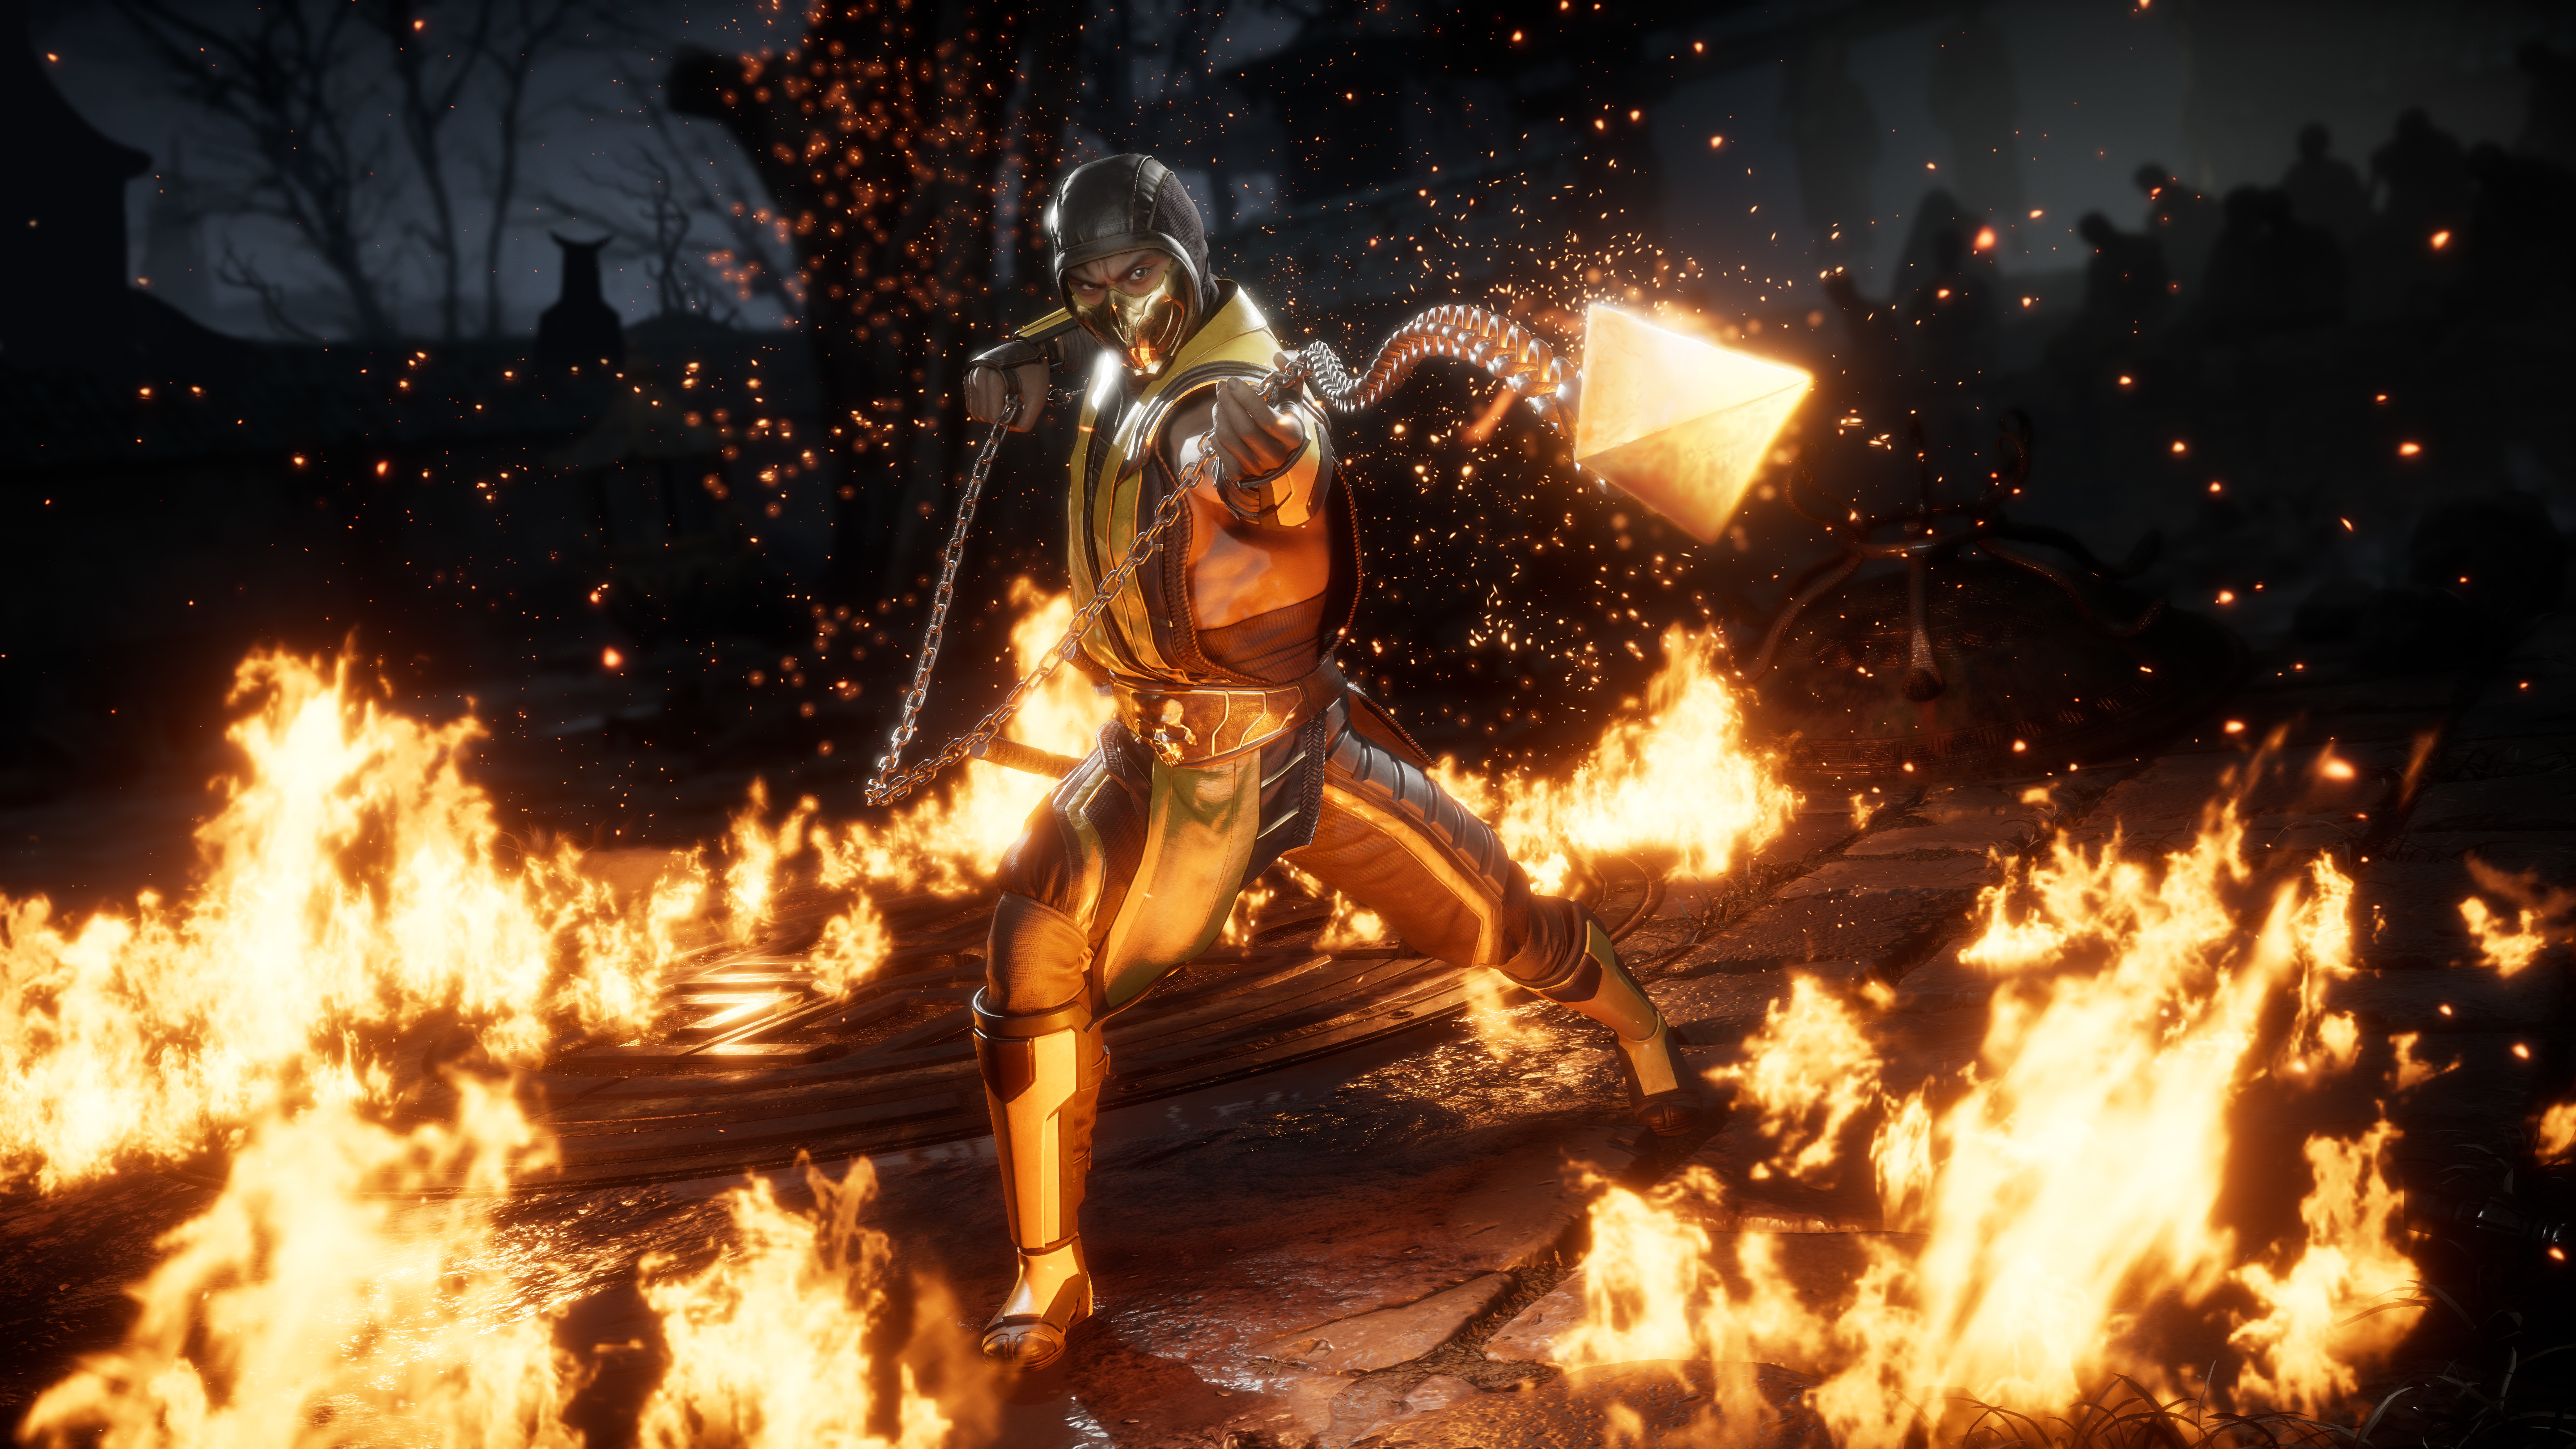 Mortal Kombat 12 is set to launch in 2023